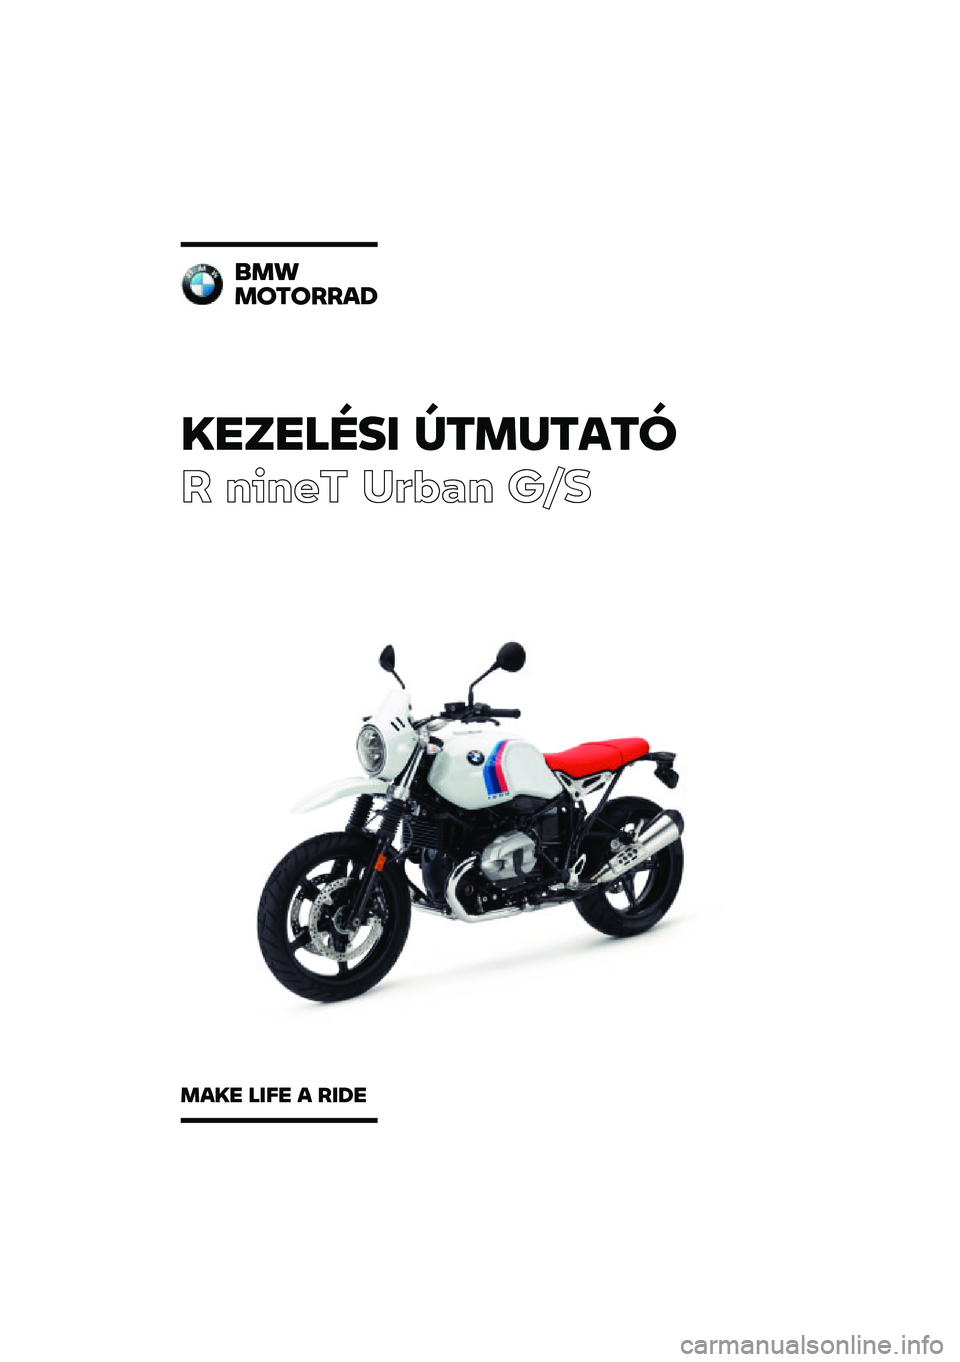 BMW MOTORRAD R NINE T URVAN G/S 2020  Kezelési útmutató (in Hungarian) �������\b�	 �
�\f�
��\f��\f�
� ����� ��\b�	�
� ��\f�
��
�
�
��\f�����
�
��� ��	�� � ��	�� 